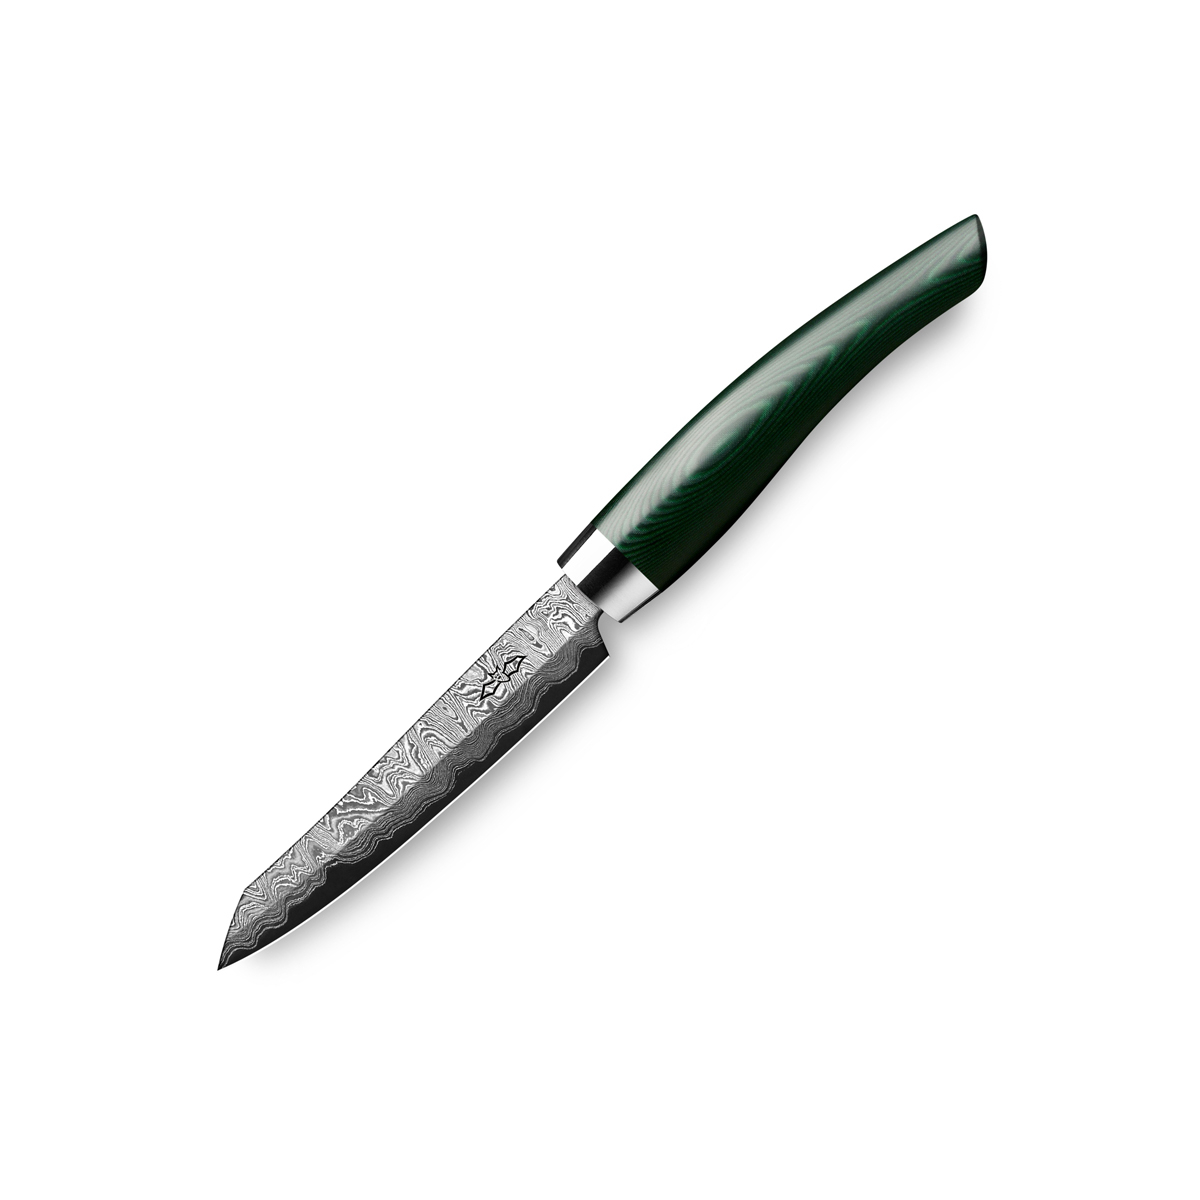 Nesmuk Exklusiv C150 Damast Officemesser 9 cm - Griff Micarta grün